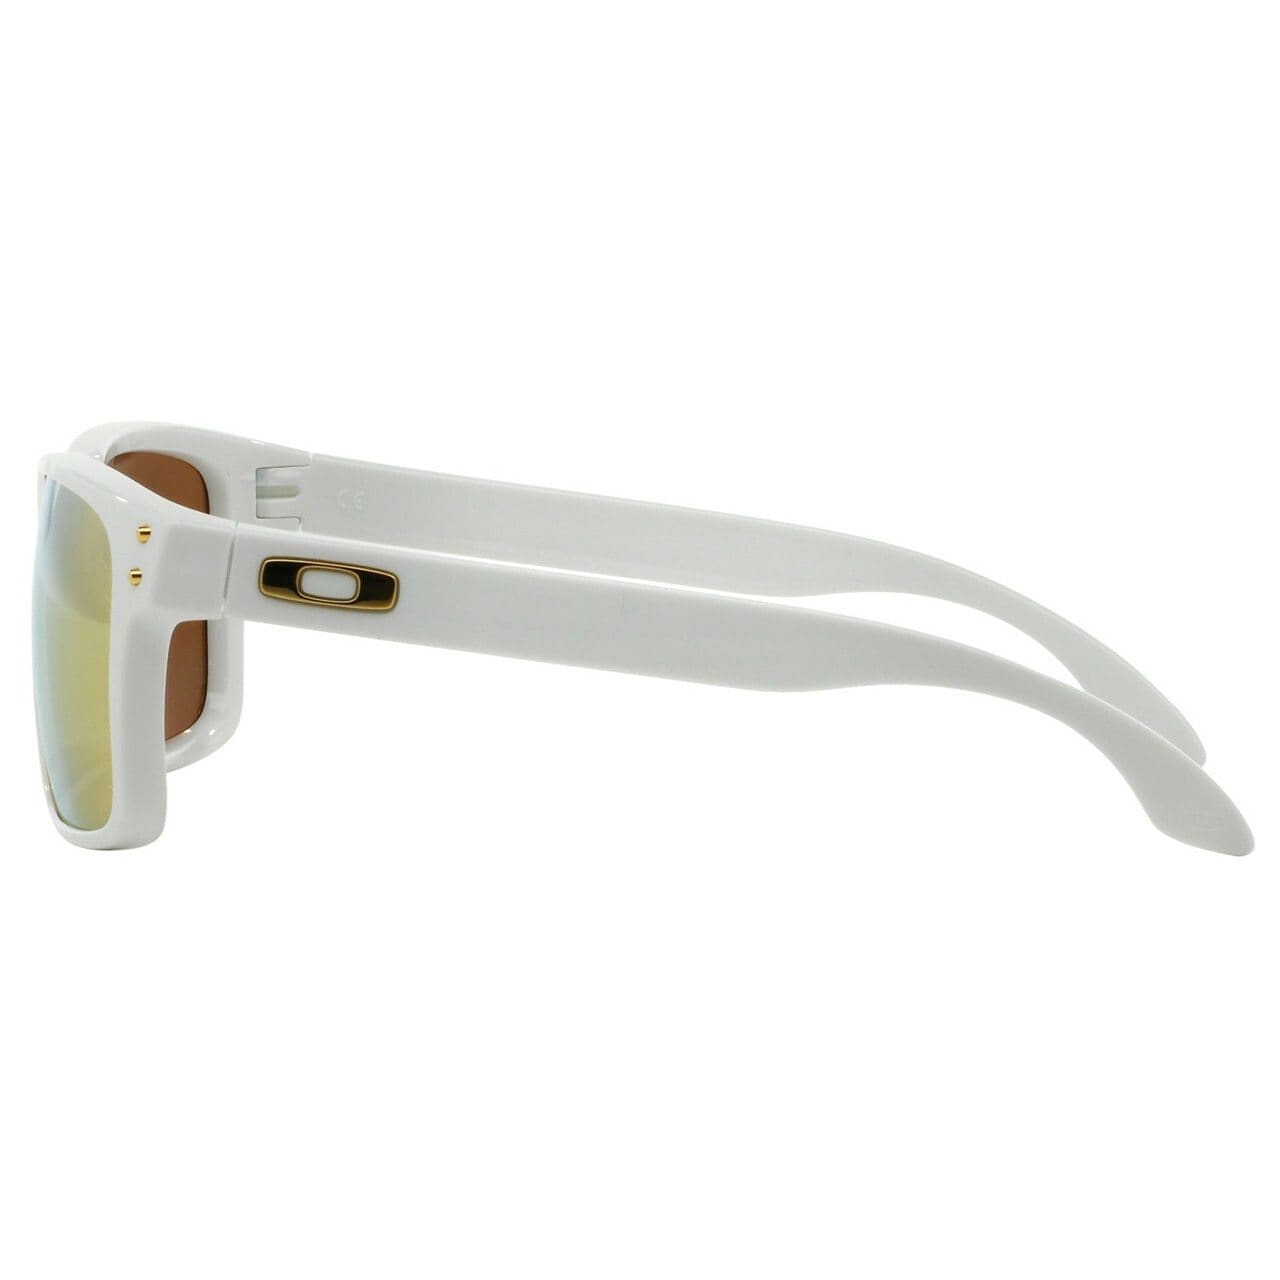 Oakley Holbrook OO9244-14 Polished White Frame 24k Iridium Lens Sunglasses - Asia Fit